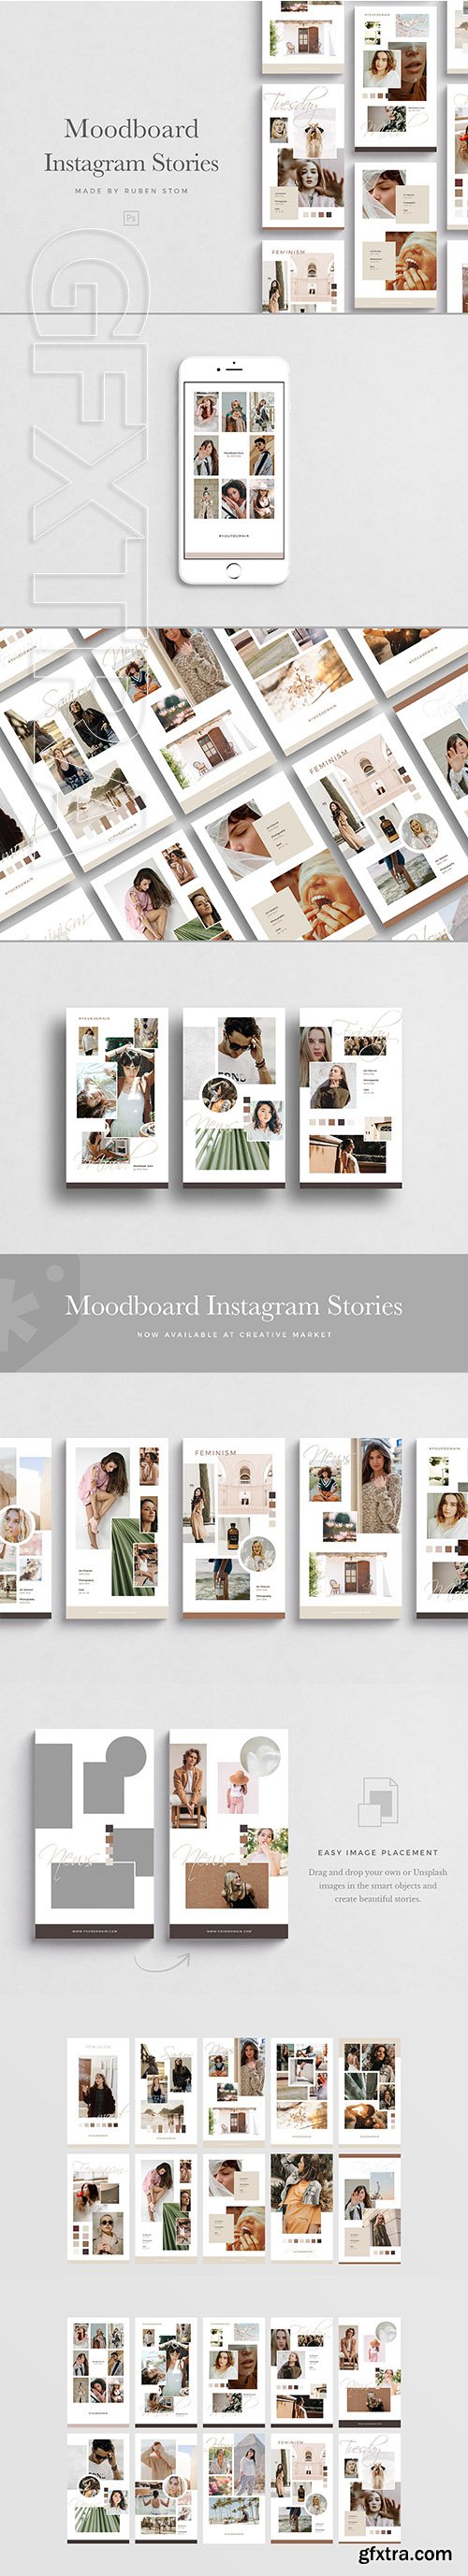 CreativeMarket - Moodboard Instagram Stories 3656050